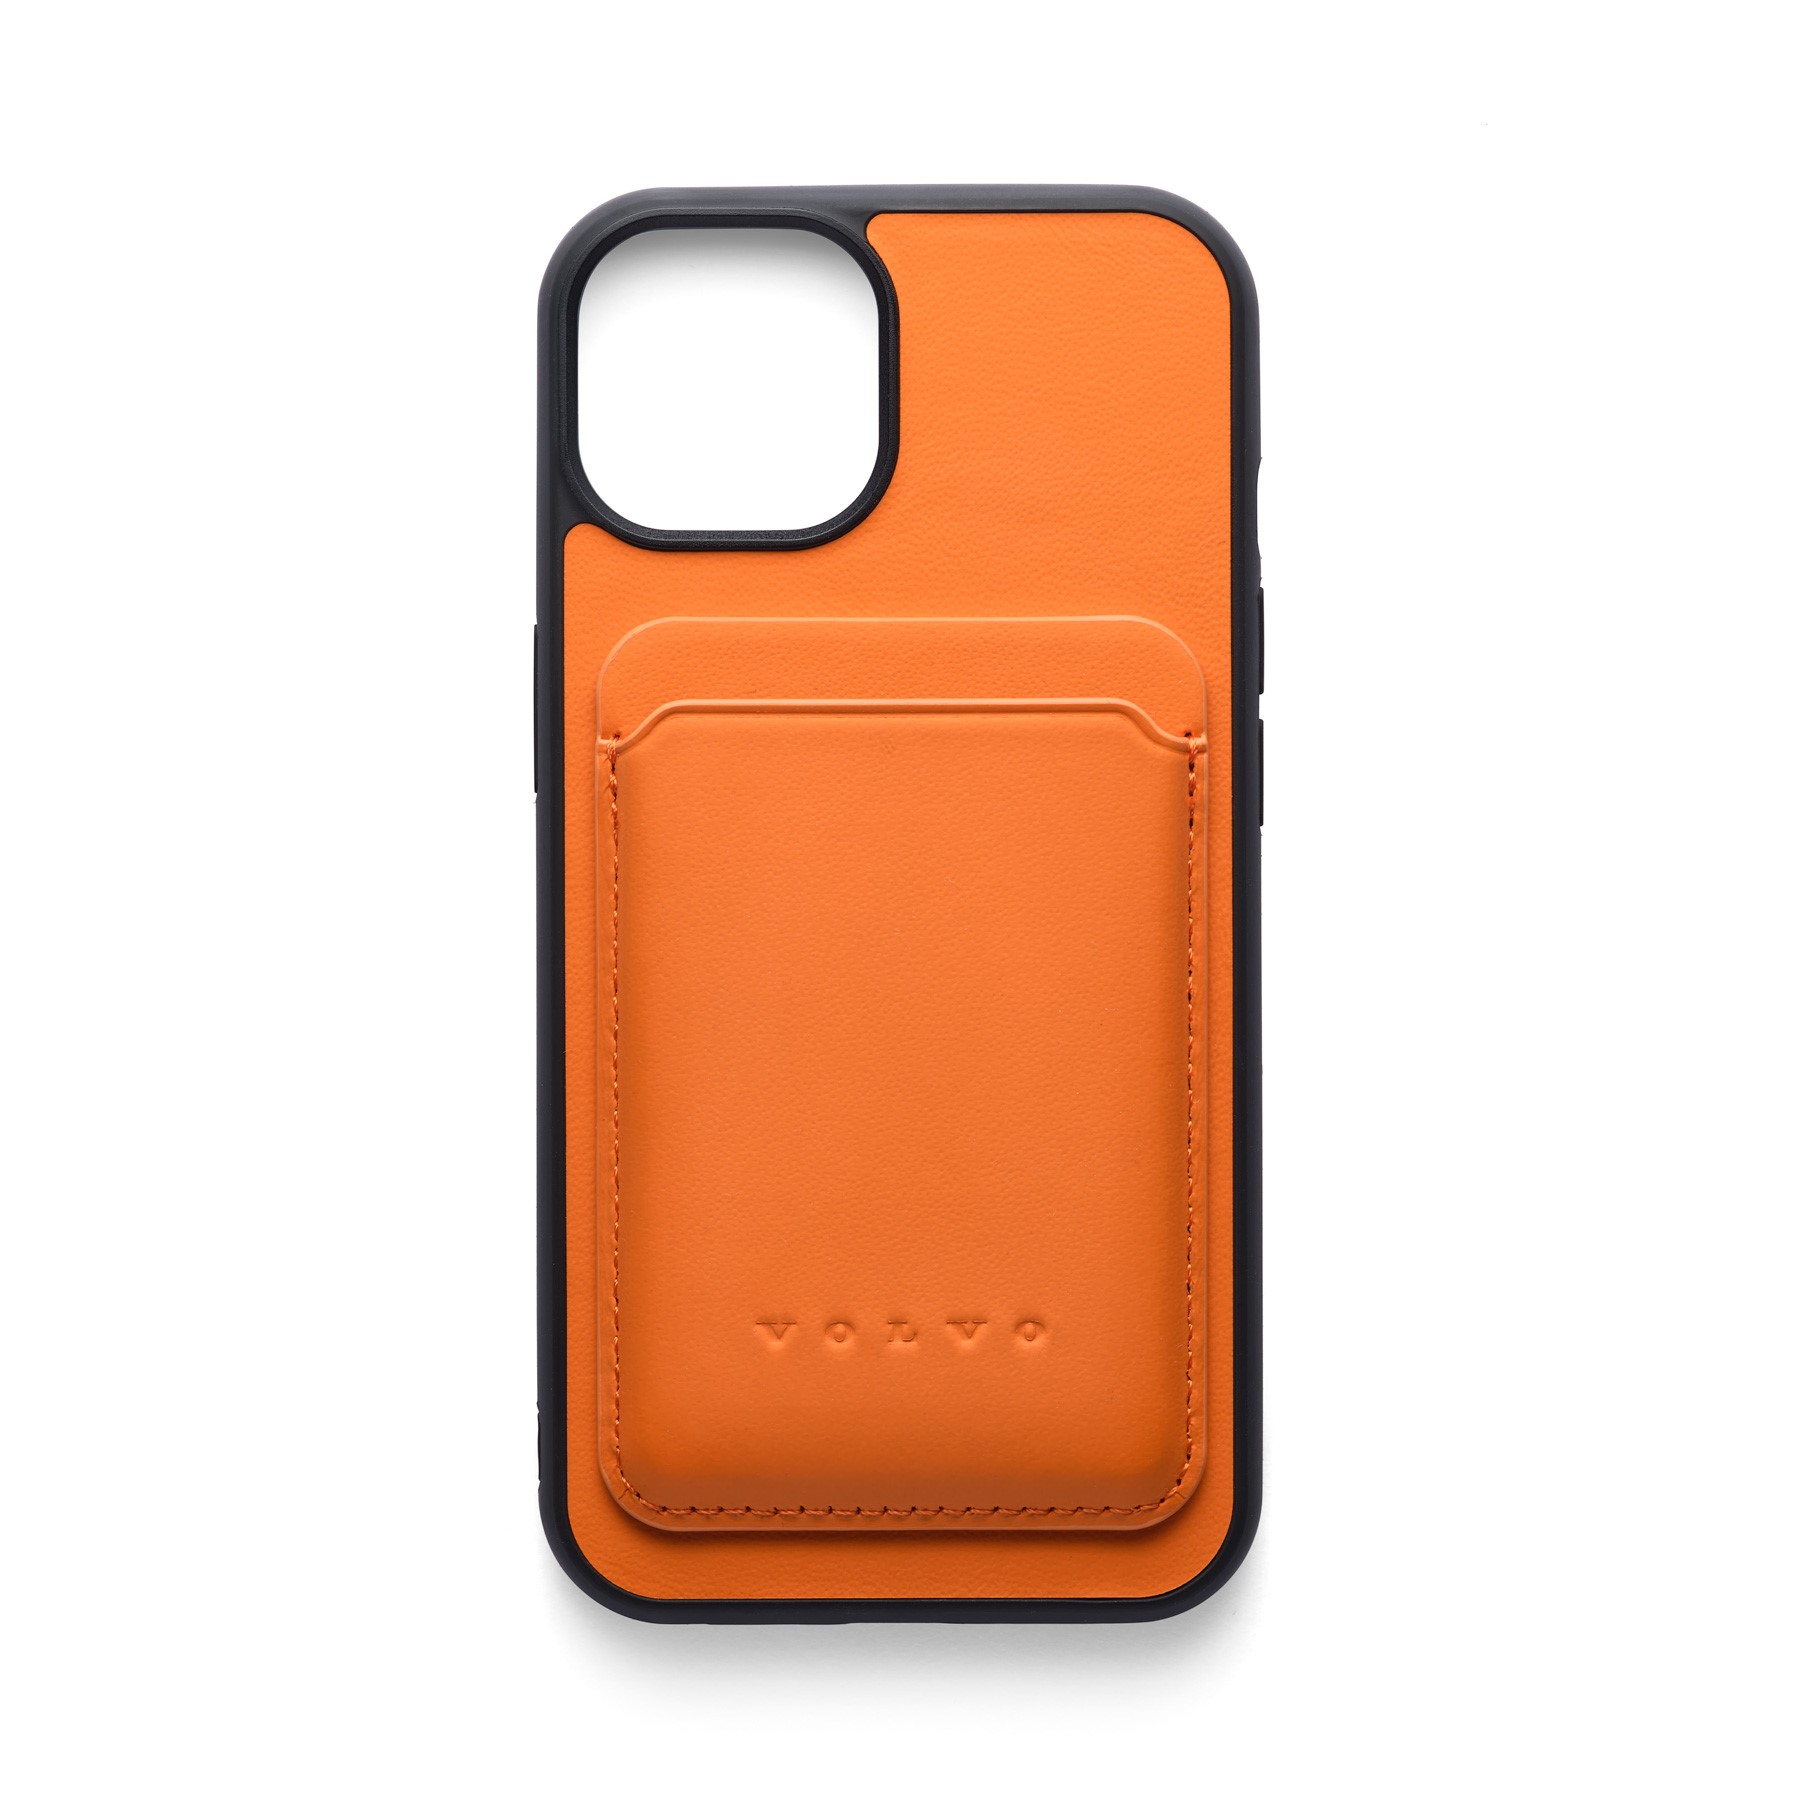 COQUE IPHONE 13 - Coque iPhone en cuir fabriqué à la main en